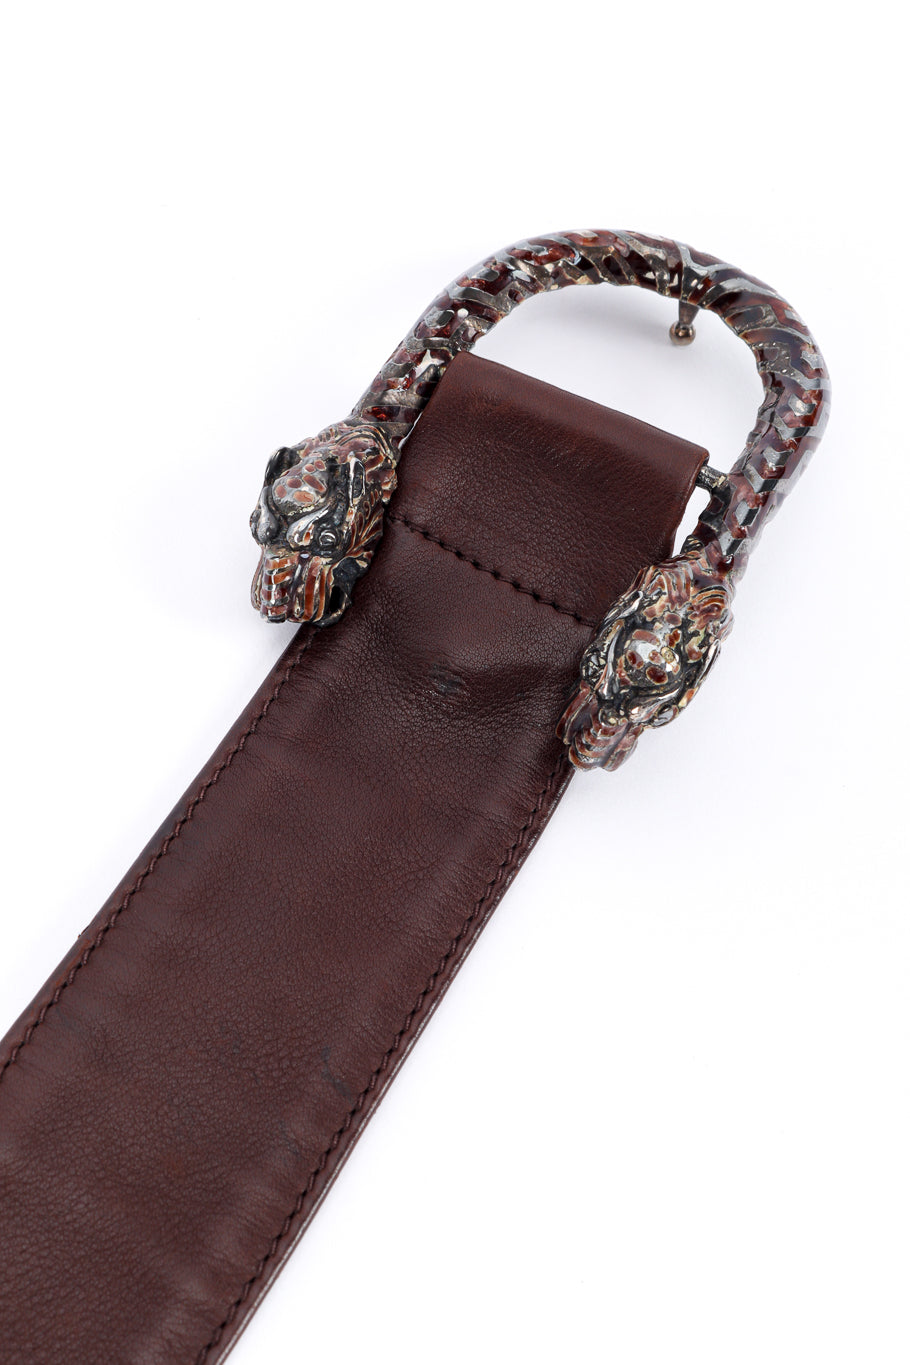 Vintage Gucci Suede and Leather Coat belt buckle front @recessla